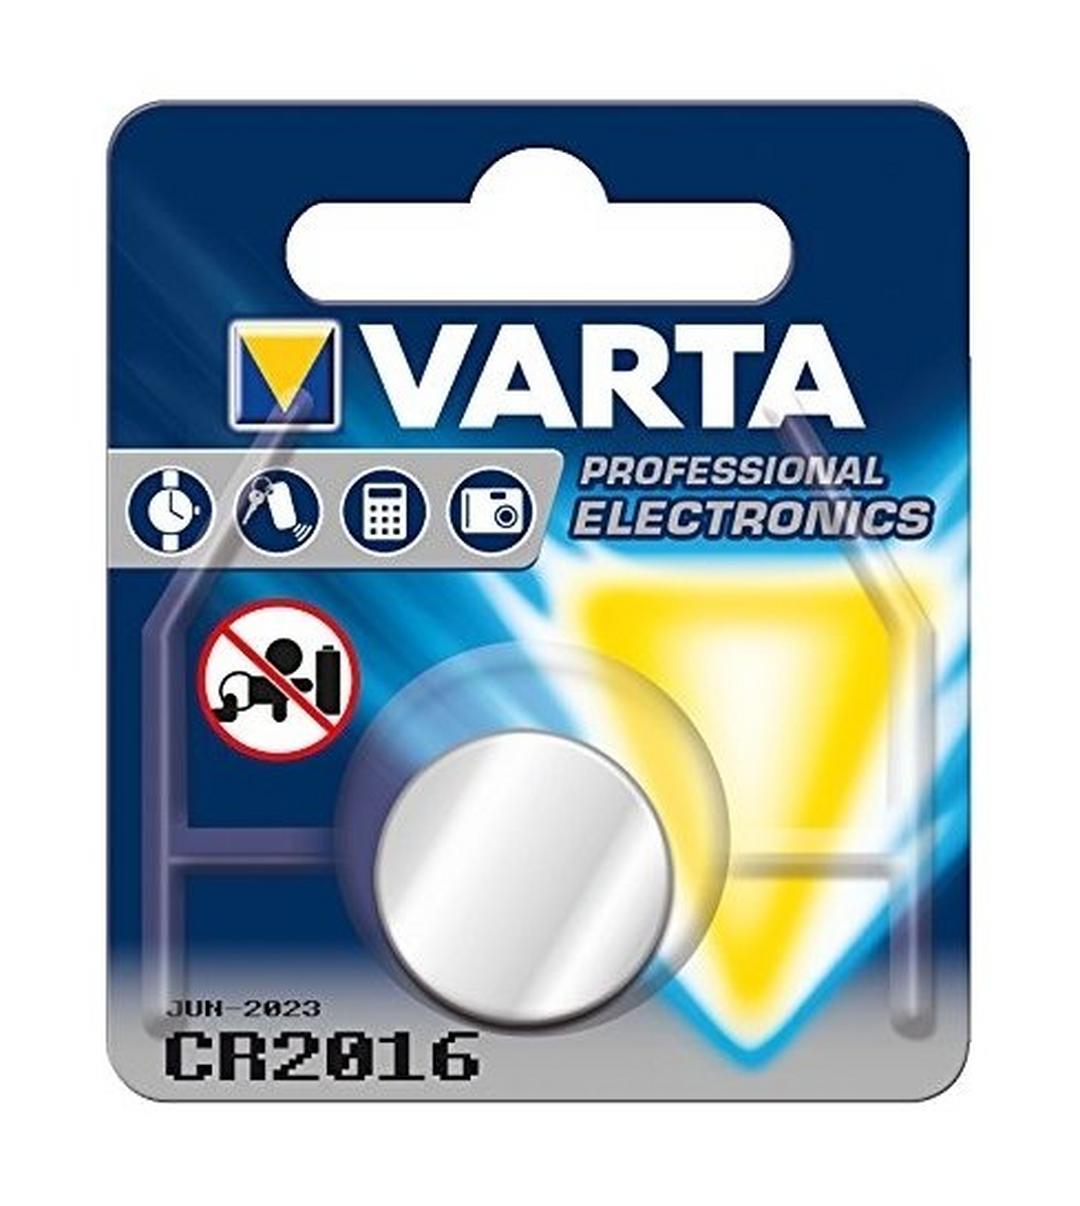 Varta Professional Electronic Battery - CR 2016